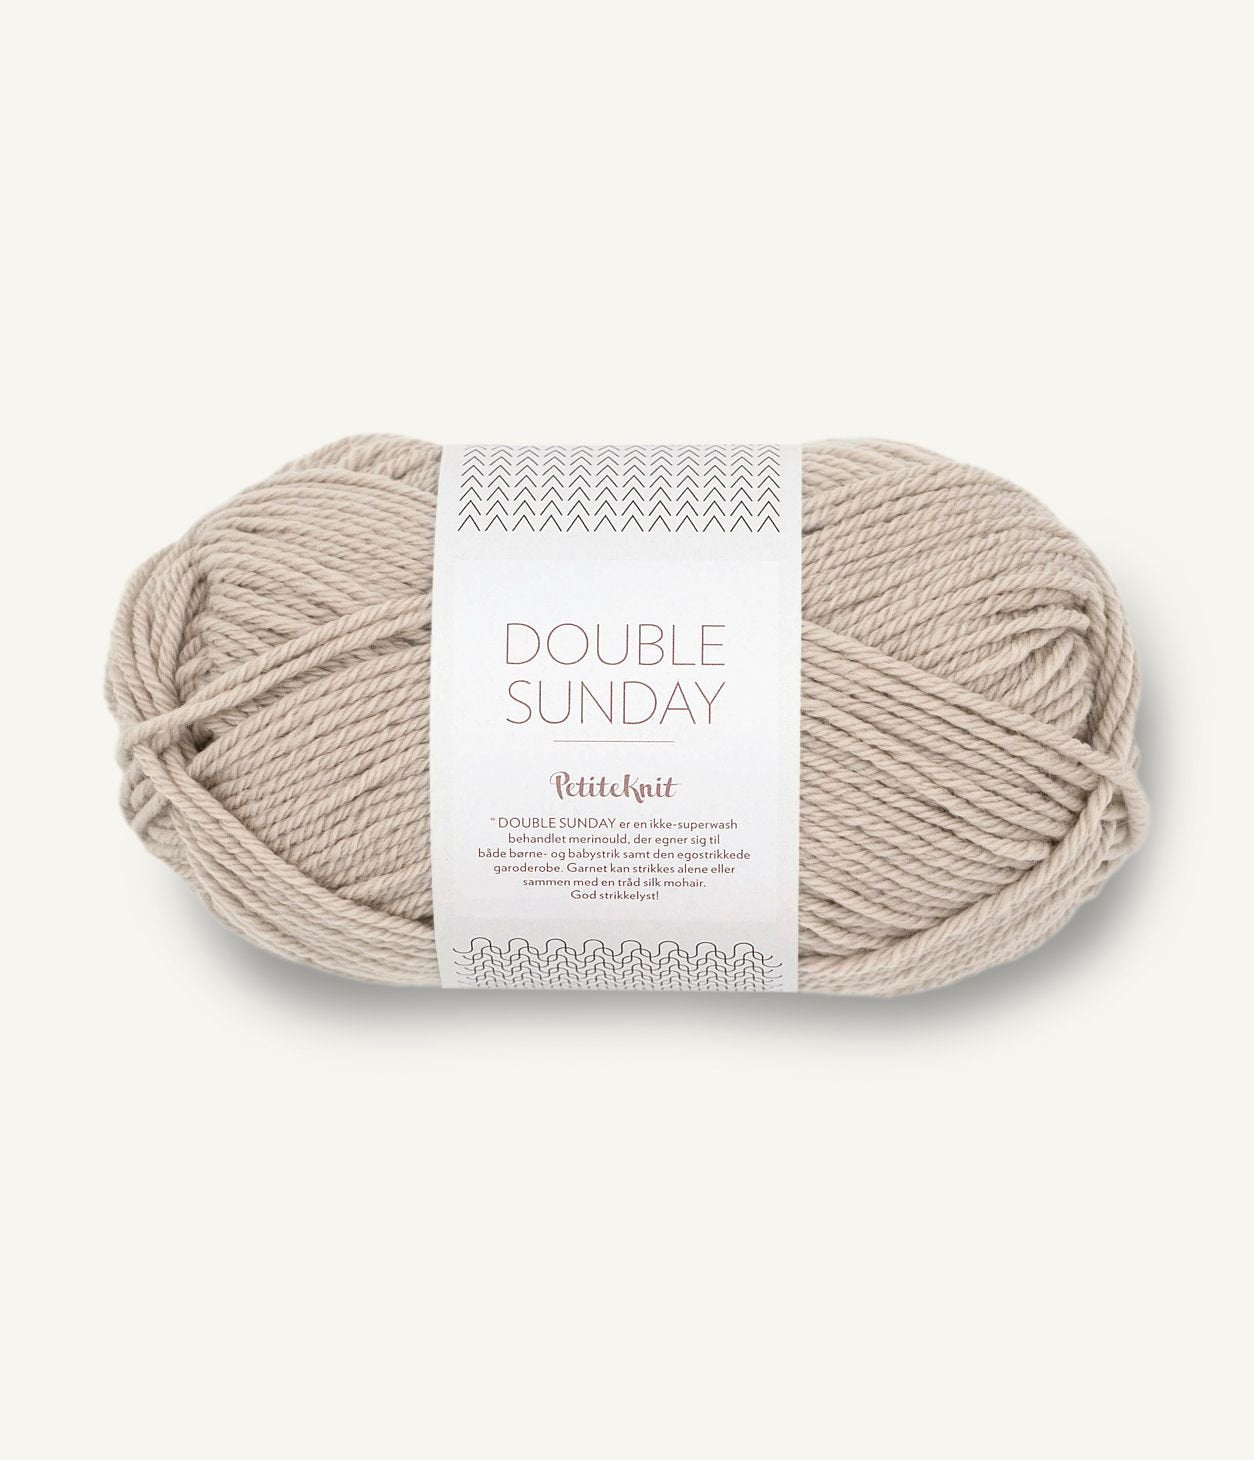 sandnes garn double Sunday by petiteknit yarn cardamom #3821